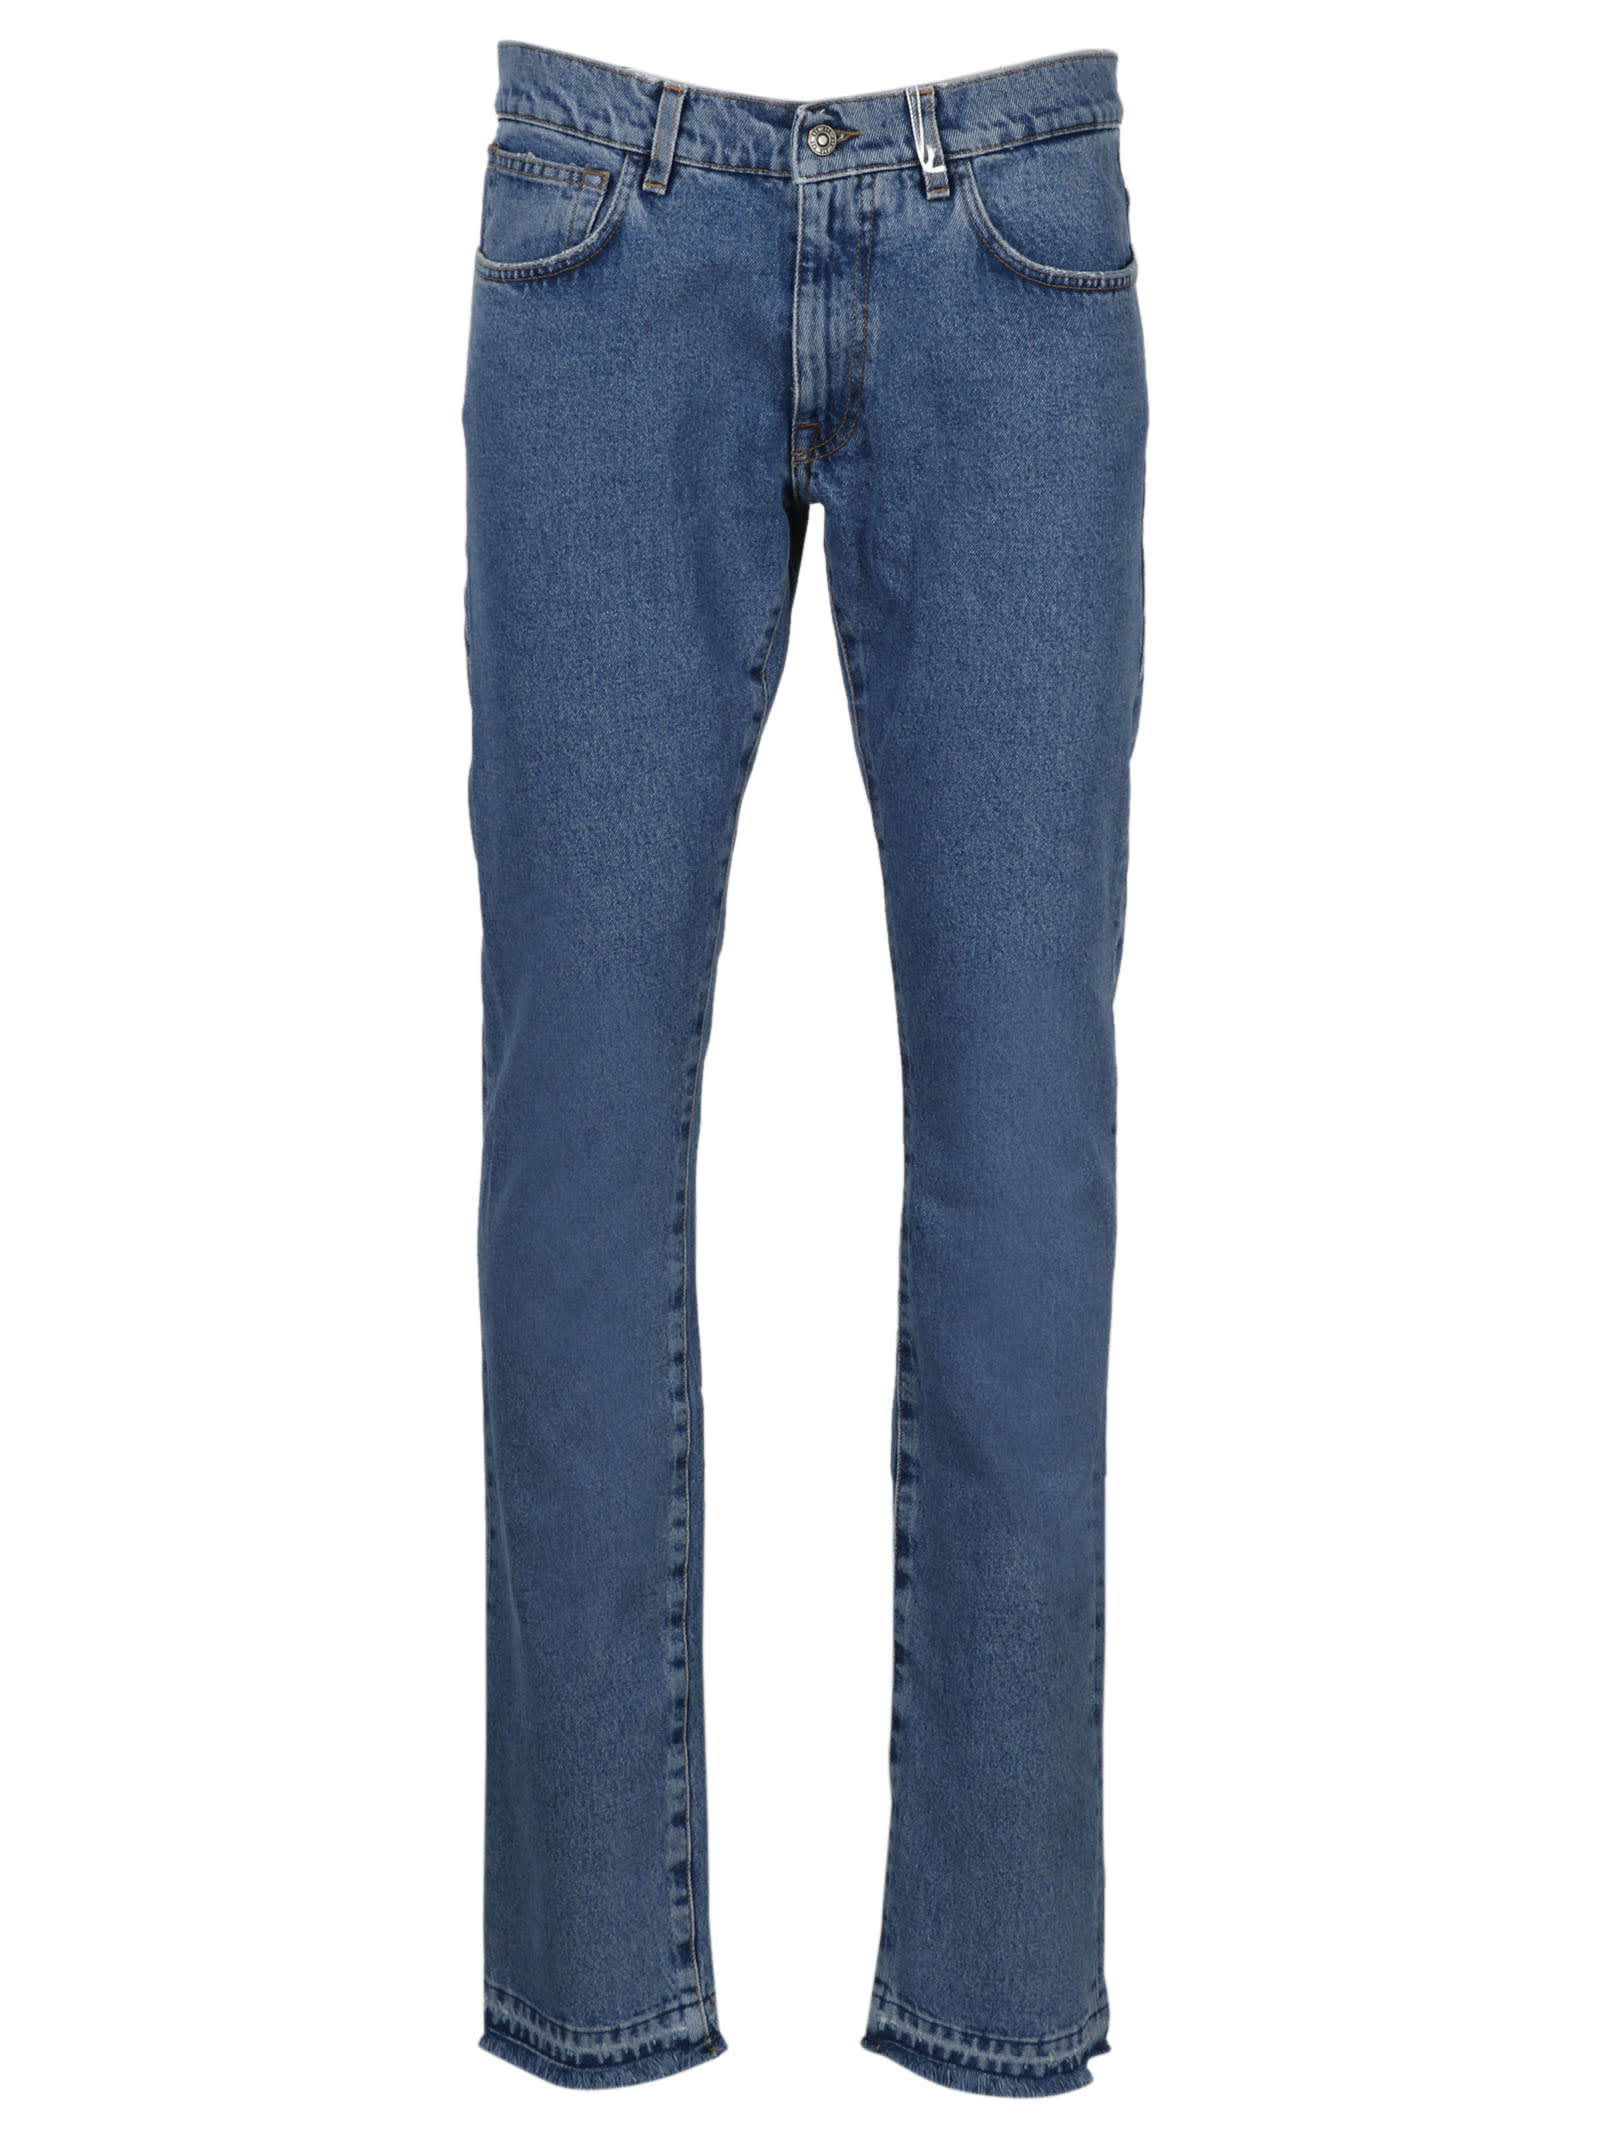 FourTwoFour on Fairfax 5-pocket Slim Fit Jeans